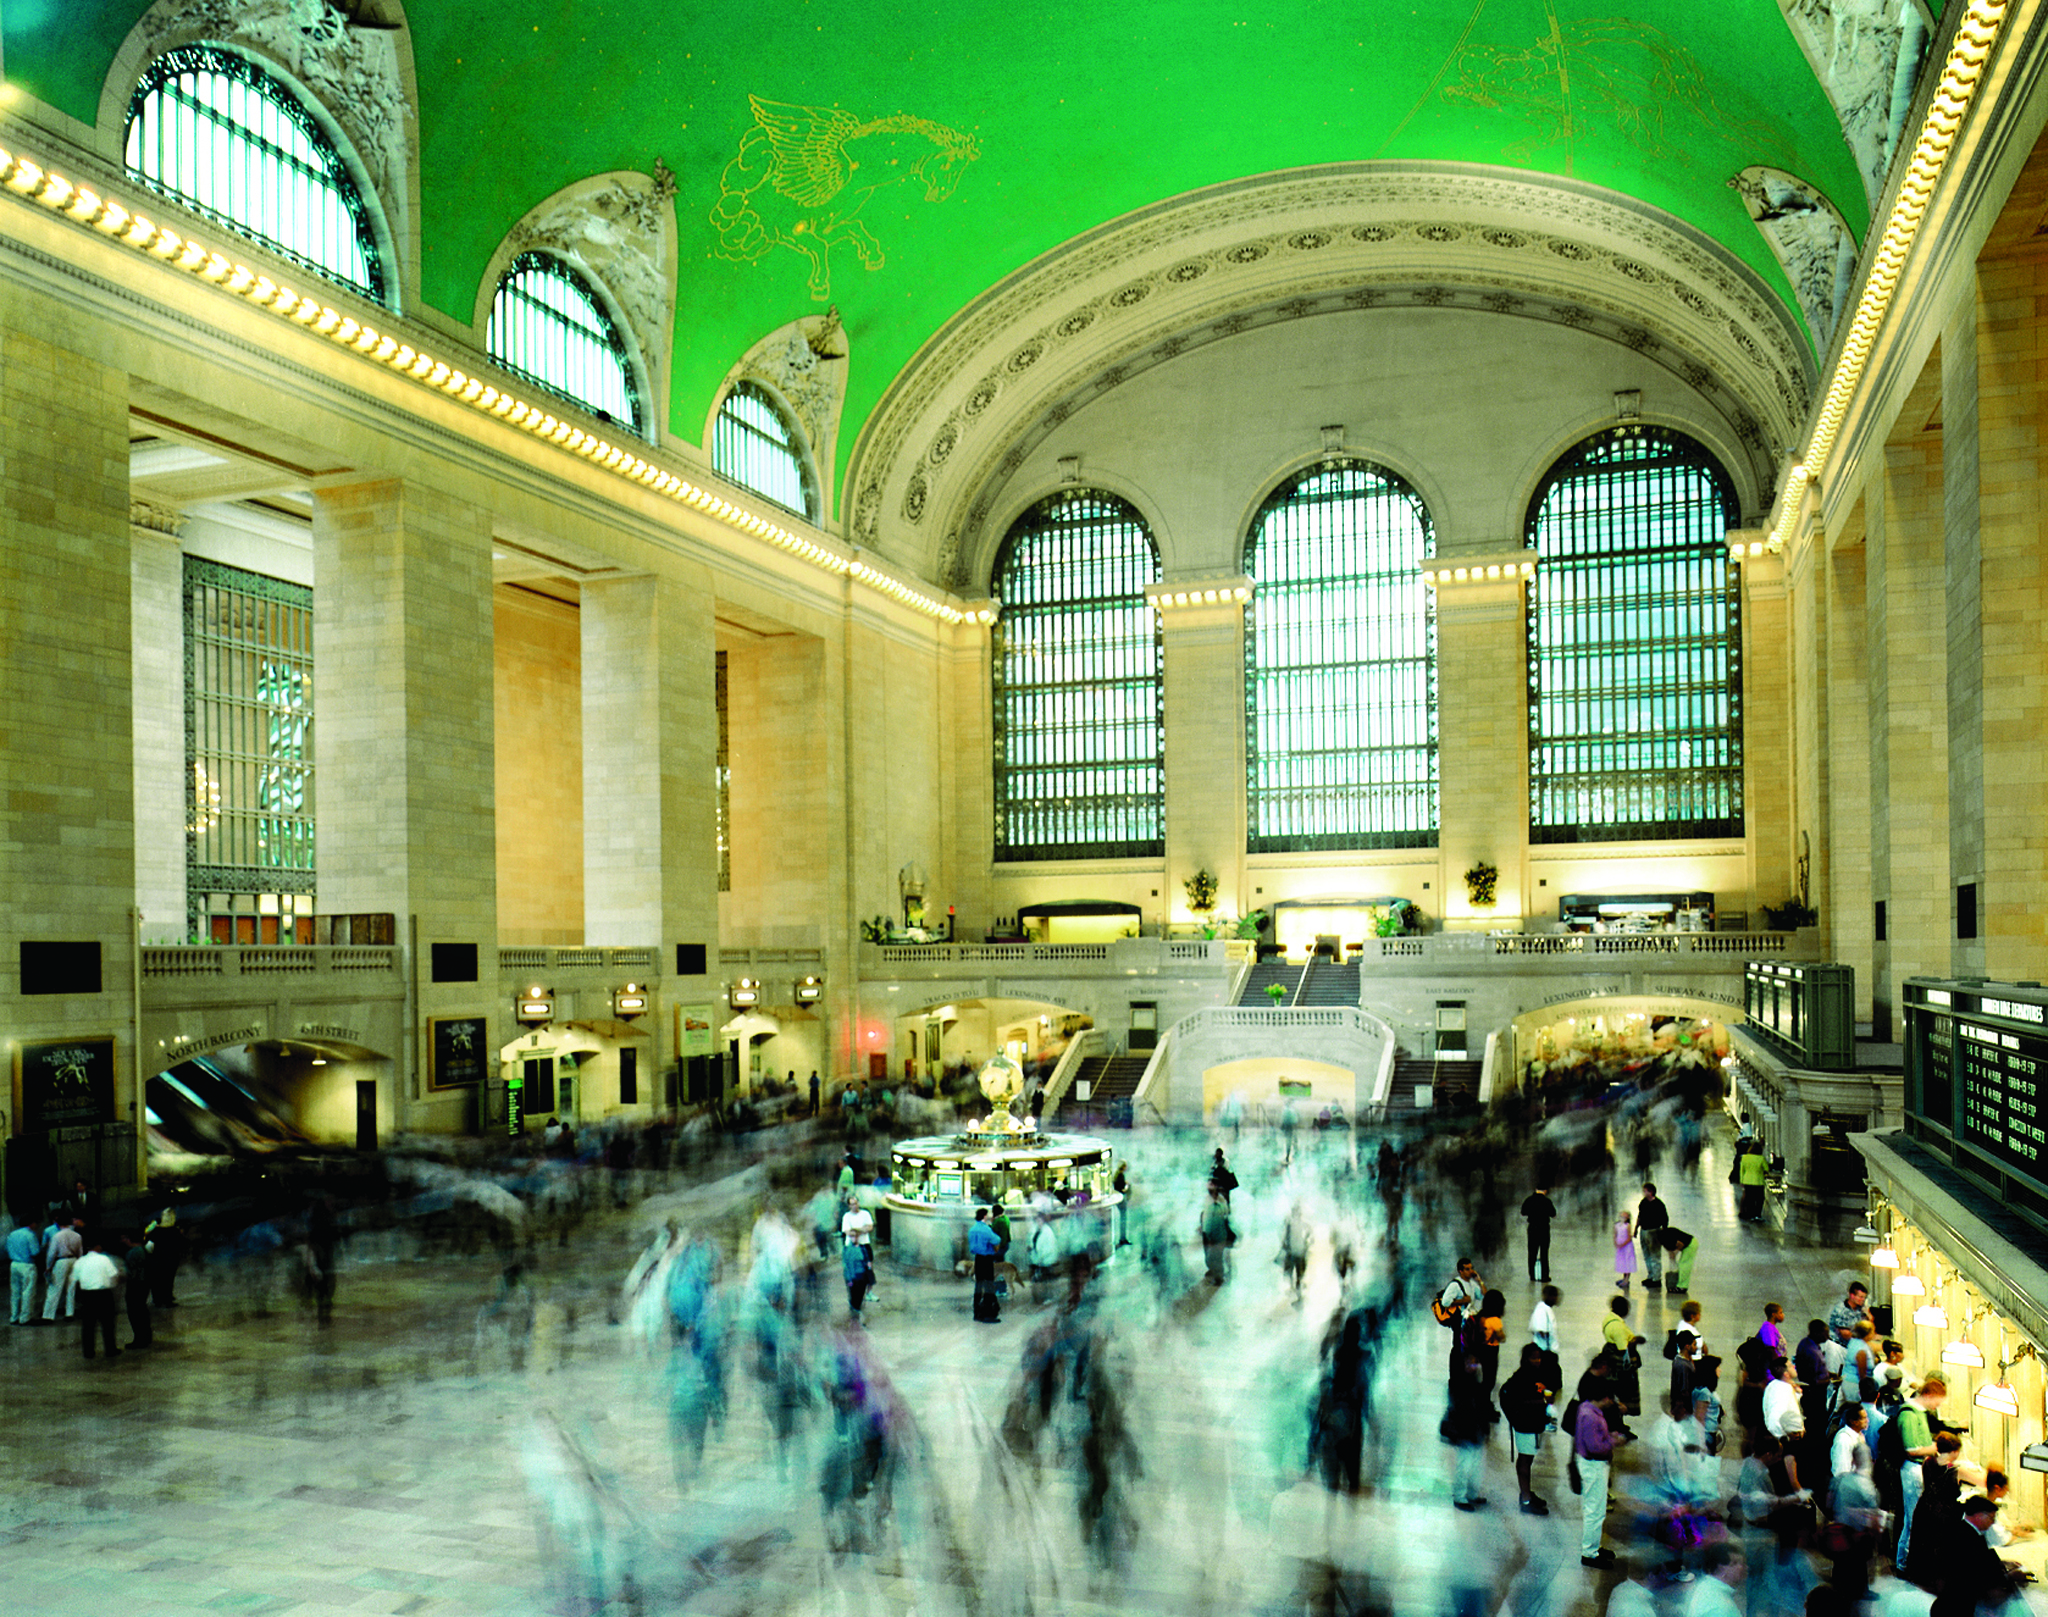 Grand Central Terminal's best-kept secrets (photos) - CNET